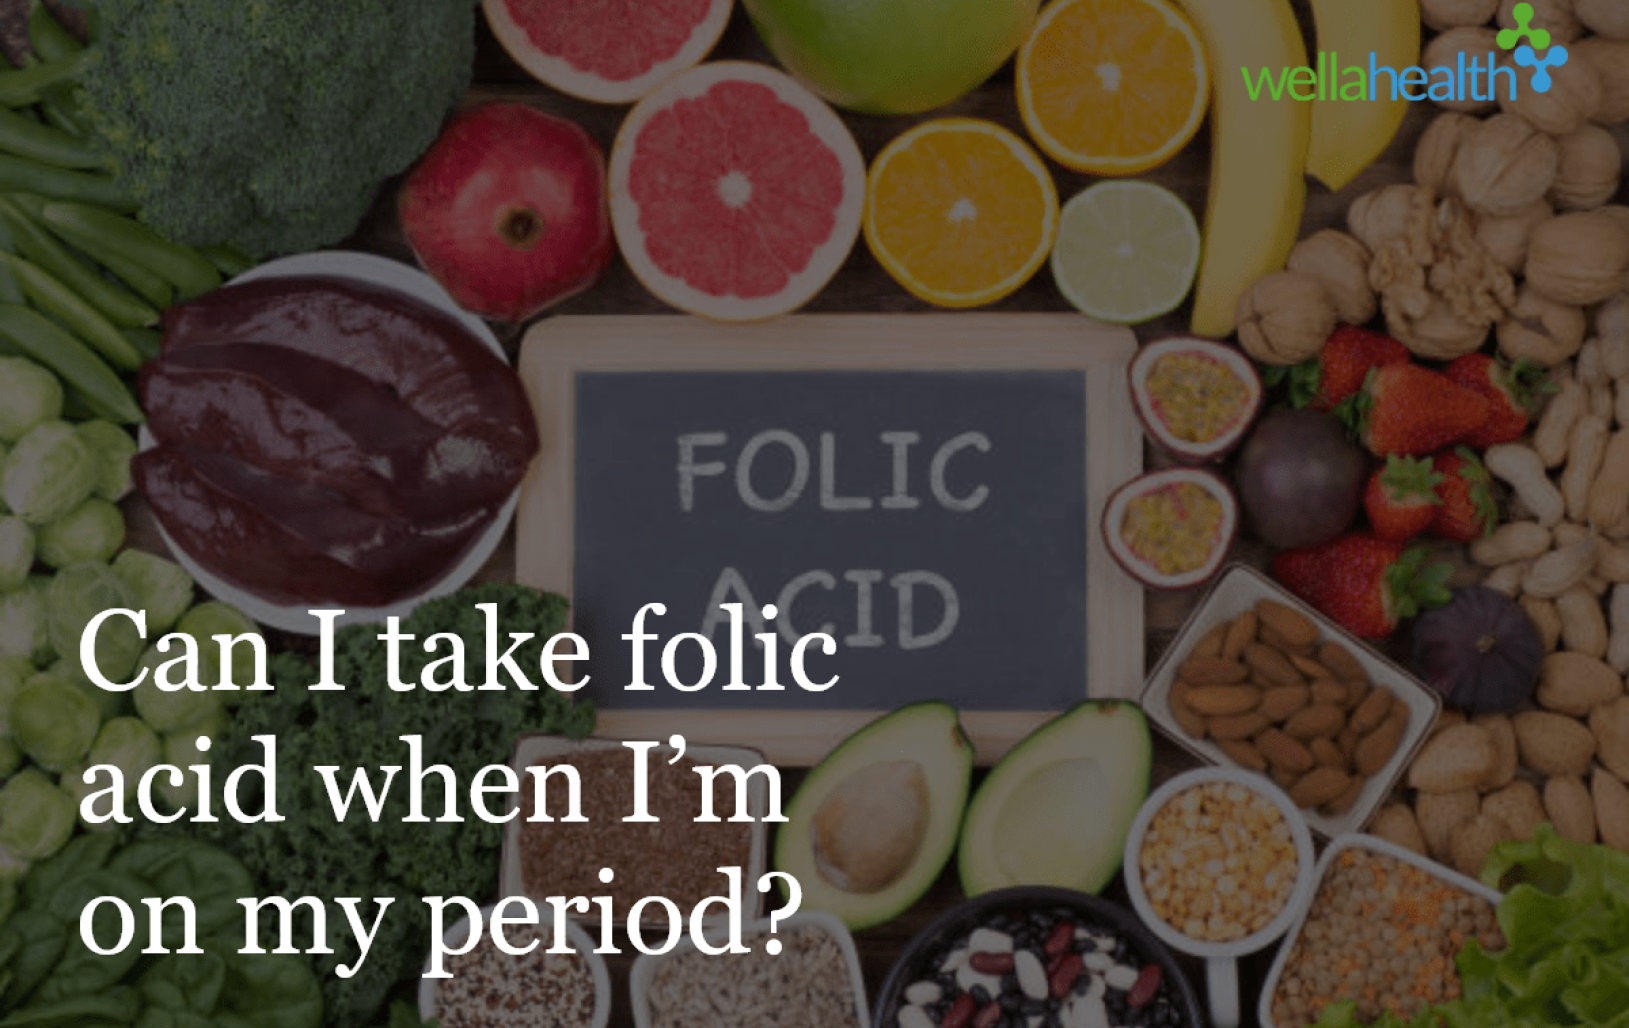 Can I take folic acid when I’m on my period?